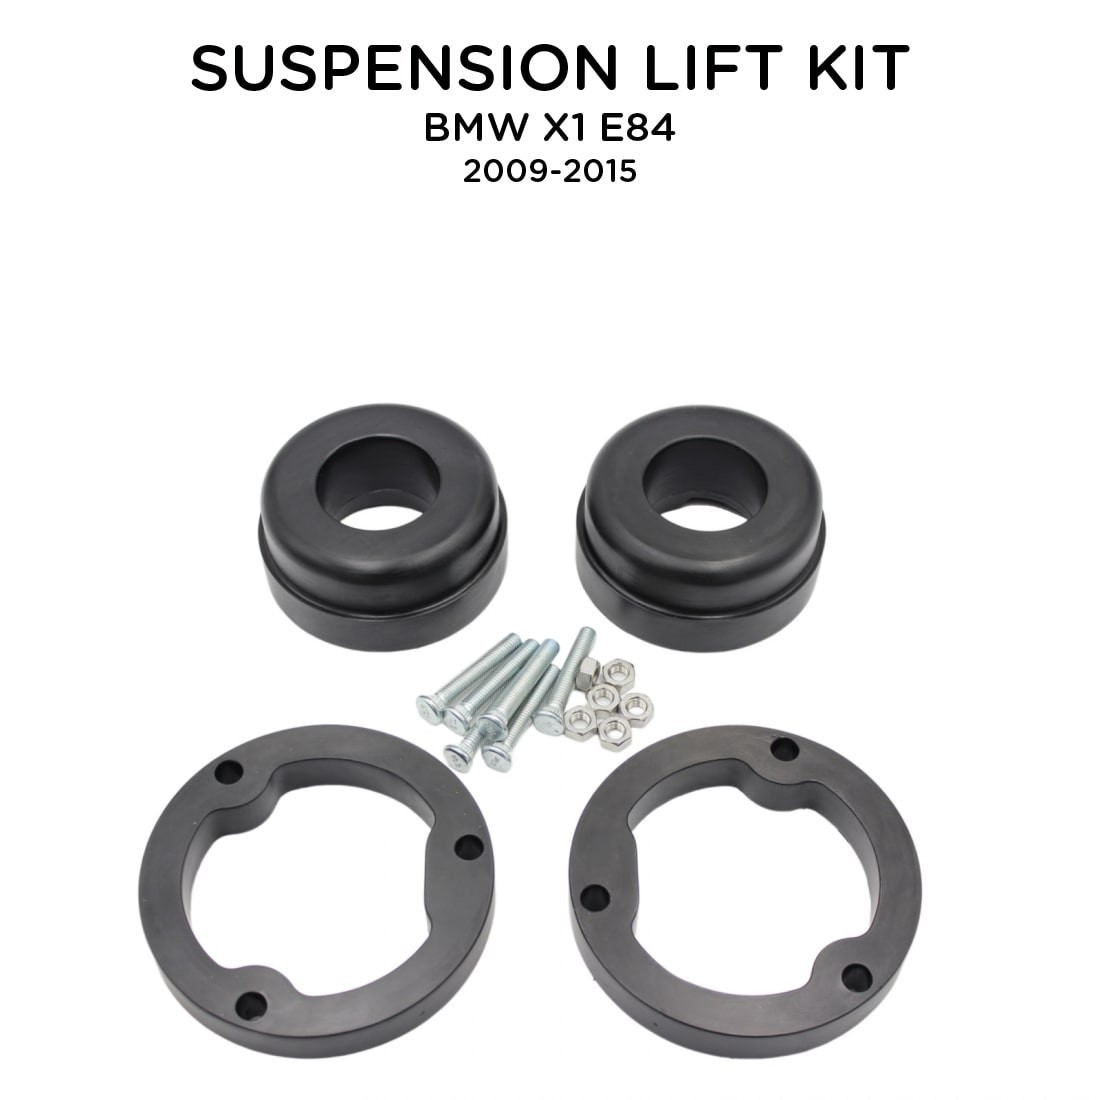 Suspension Lift Kit For BMW X1 E84 2009-2015